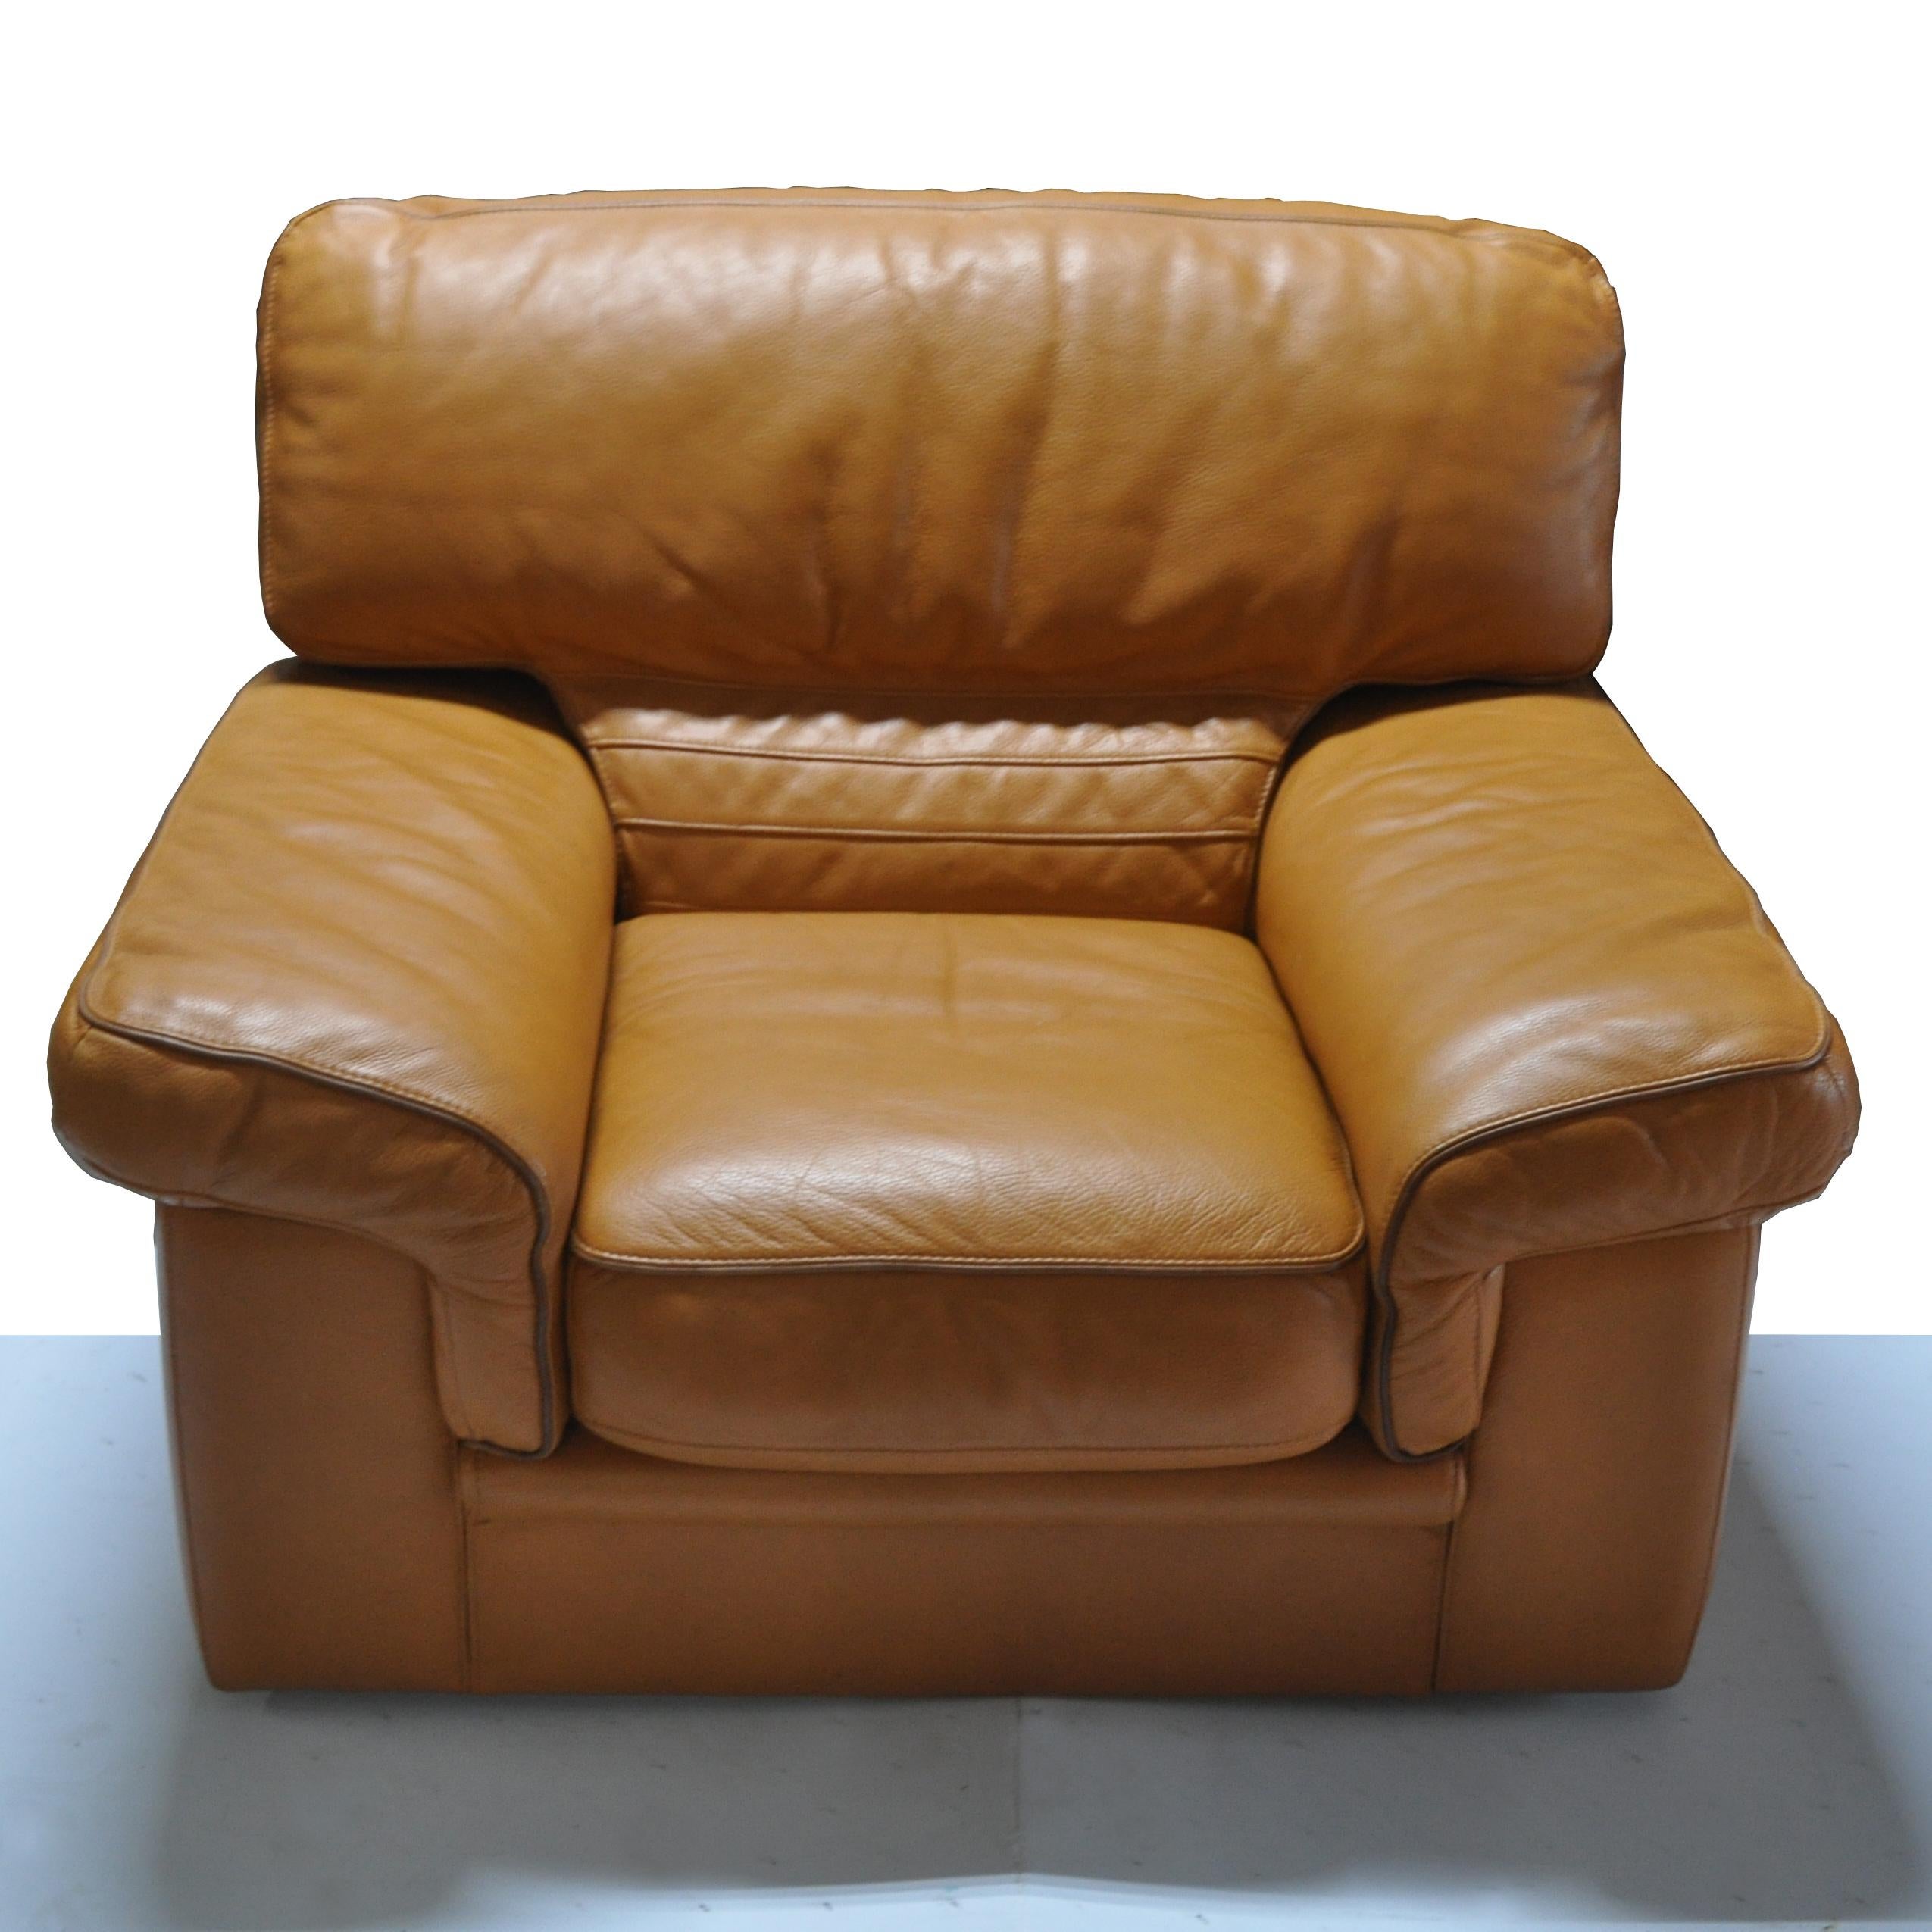 roche bobois leather chair